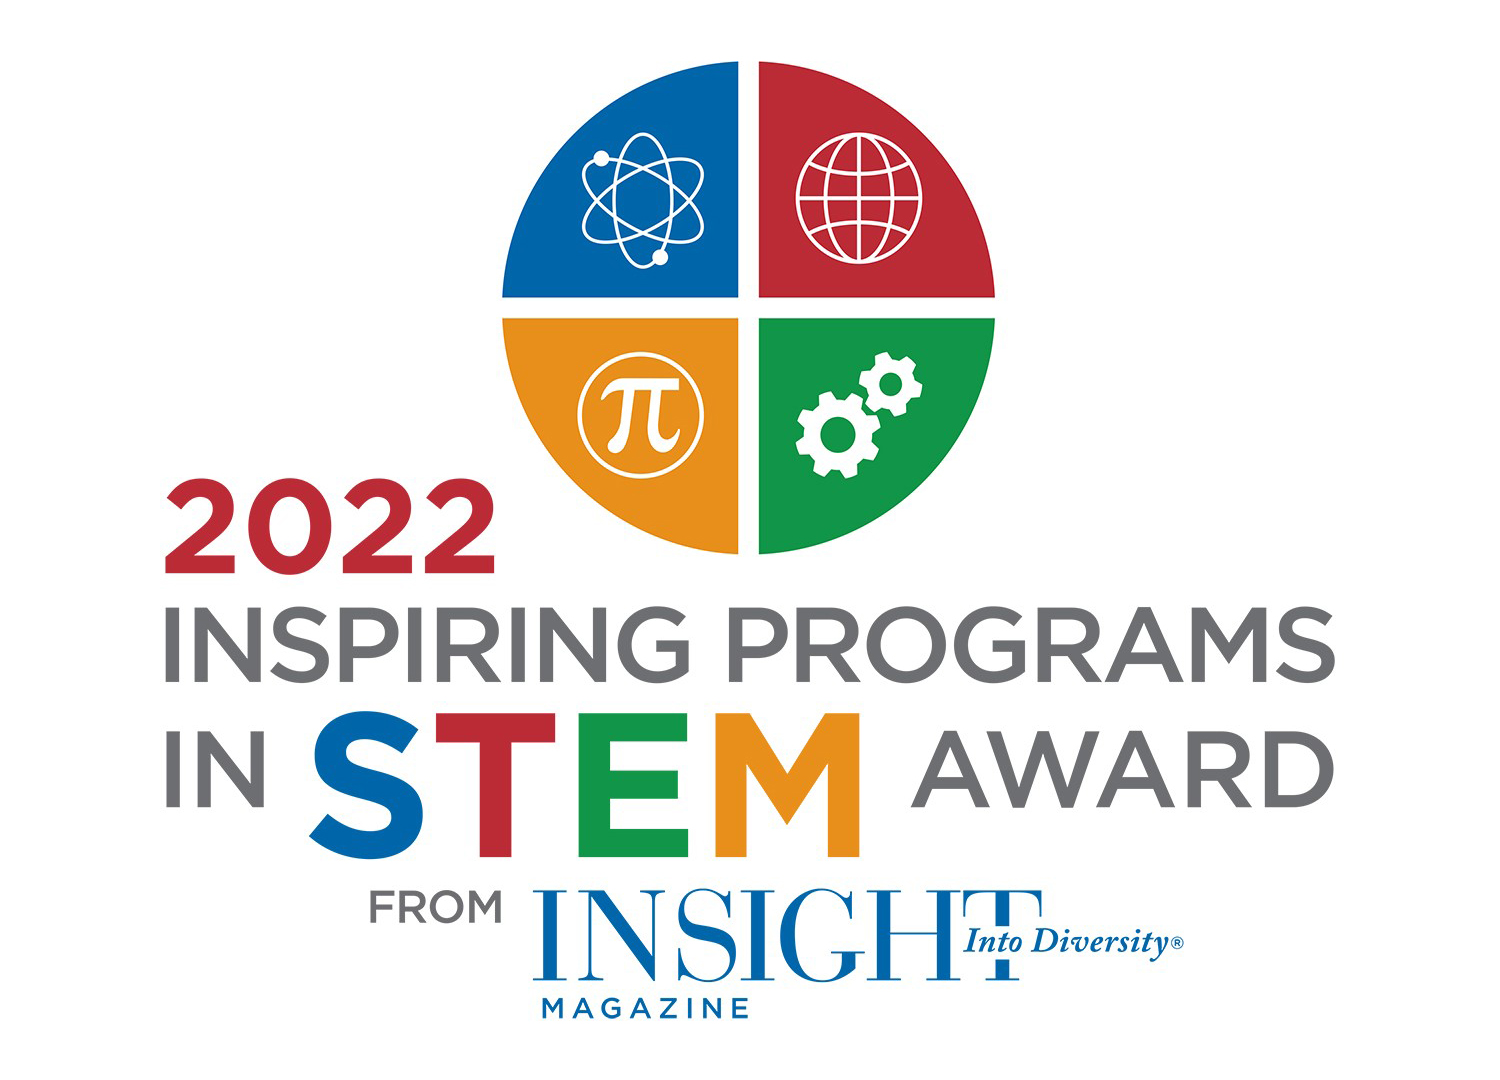 2022 Inspiring Programs in STEM Award from Insight Into Diversity Magazine